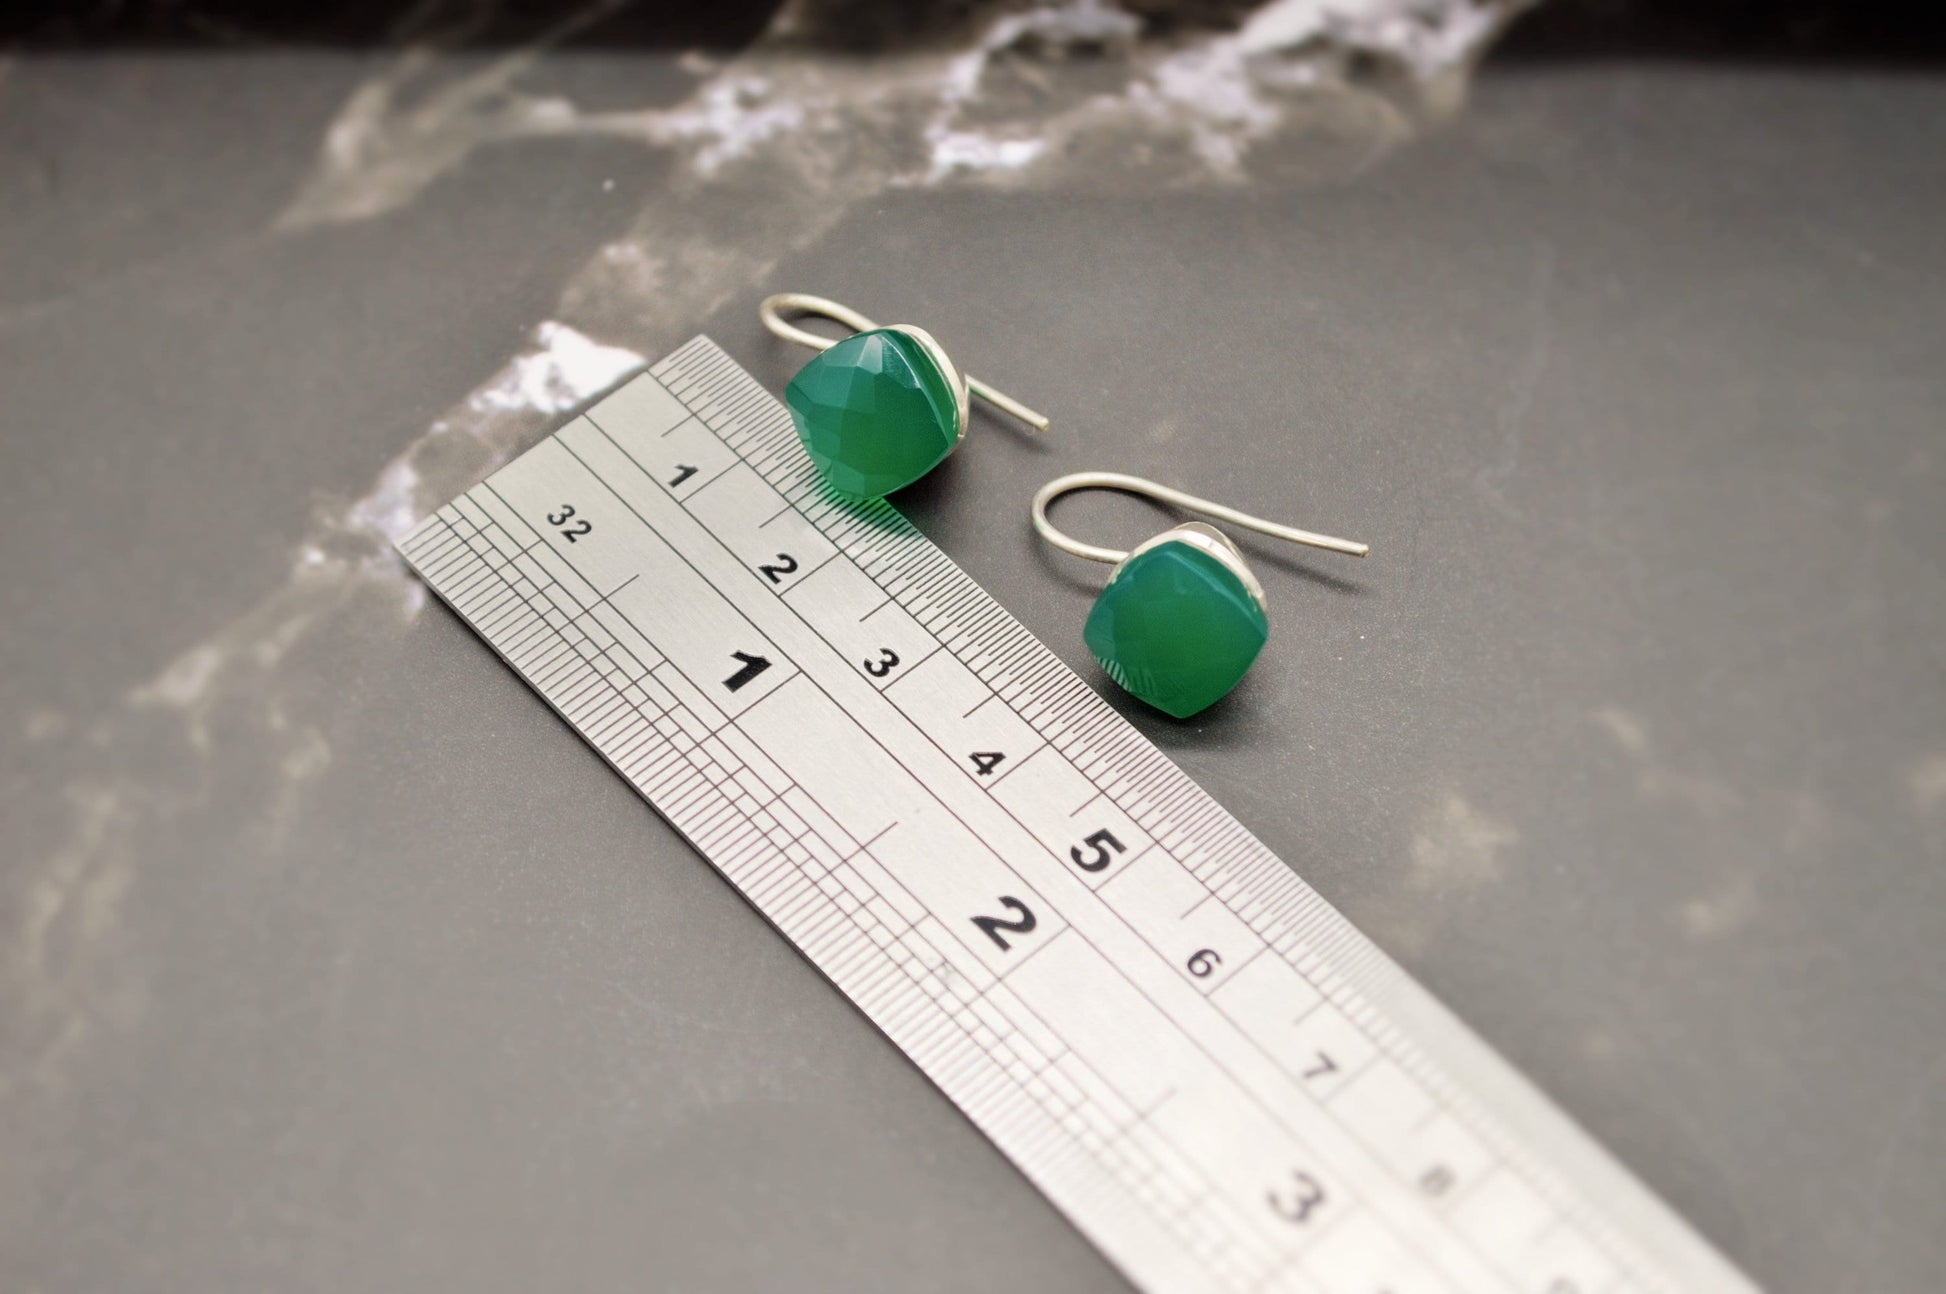 Green Onyx Earrings, Sterling Silver Gemstone Earrings, Dangle Drop Earrings, Handmade Earrings, Gifts For Her